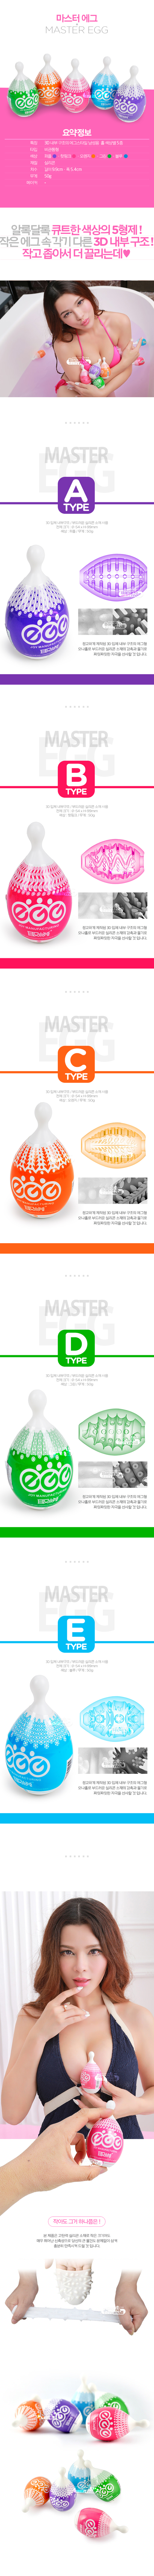 [3D 입체구조] 마스터 에그(Master Egg) - 6922359301307